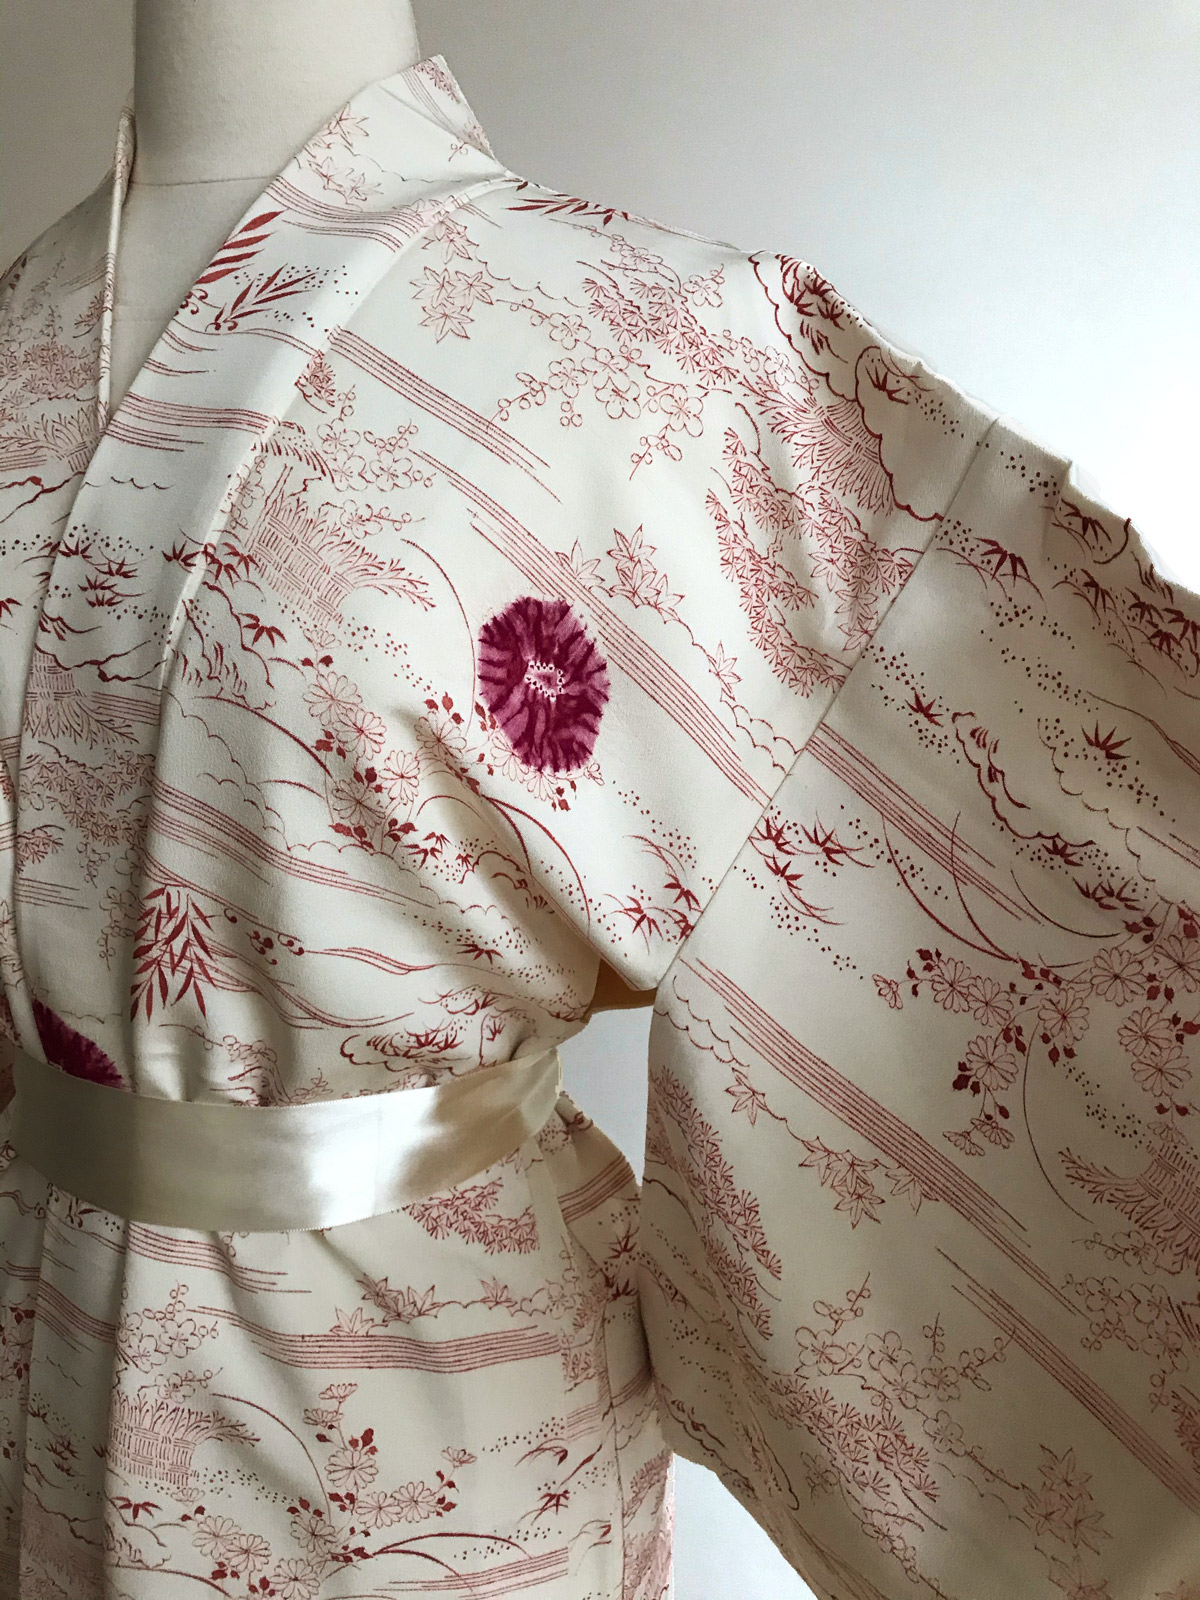 Nozomi – creamy beige Kimono jacket with lovely design